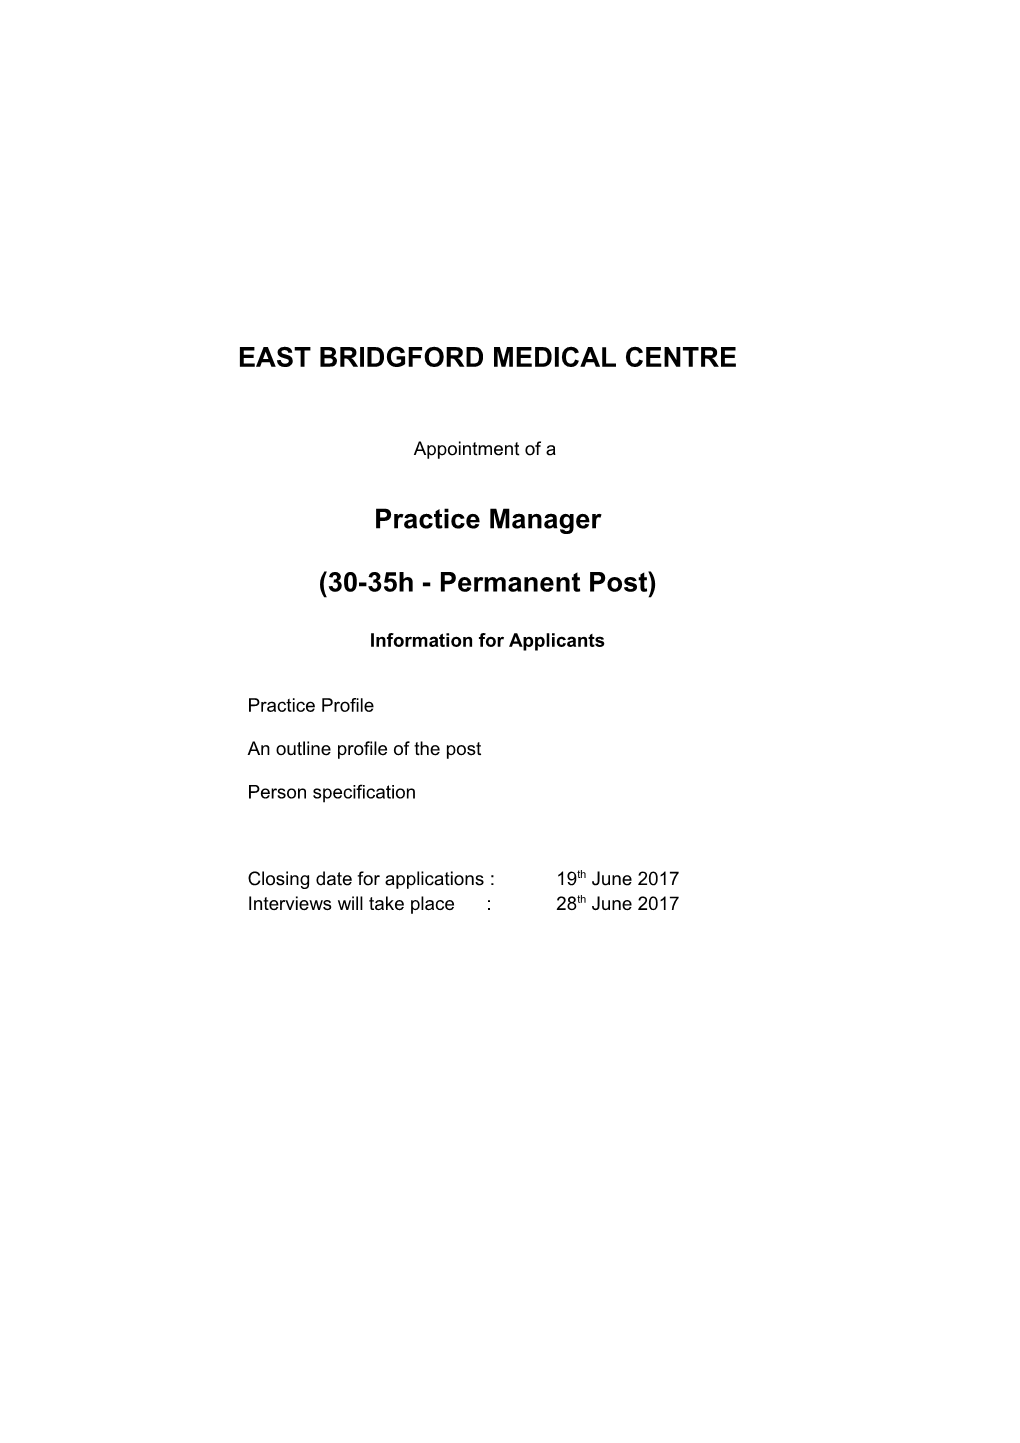 East Bridgford Medical Centre